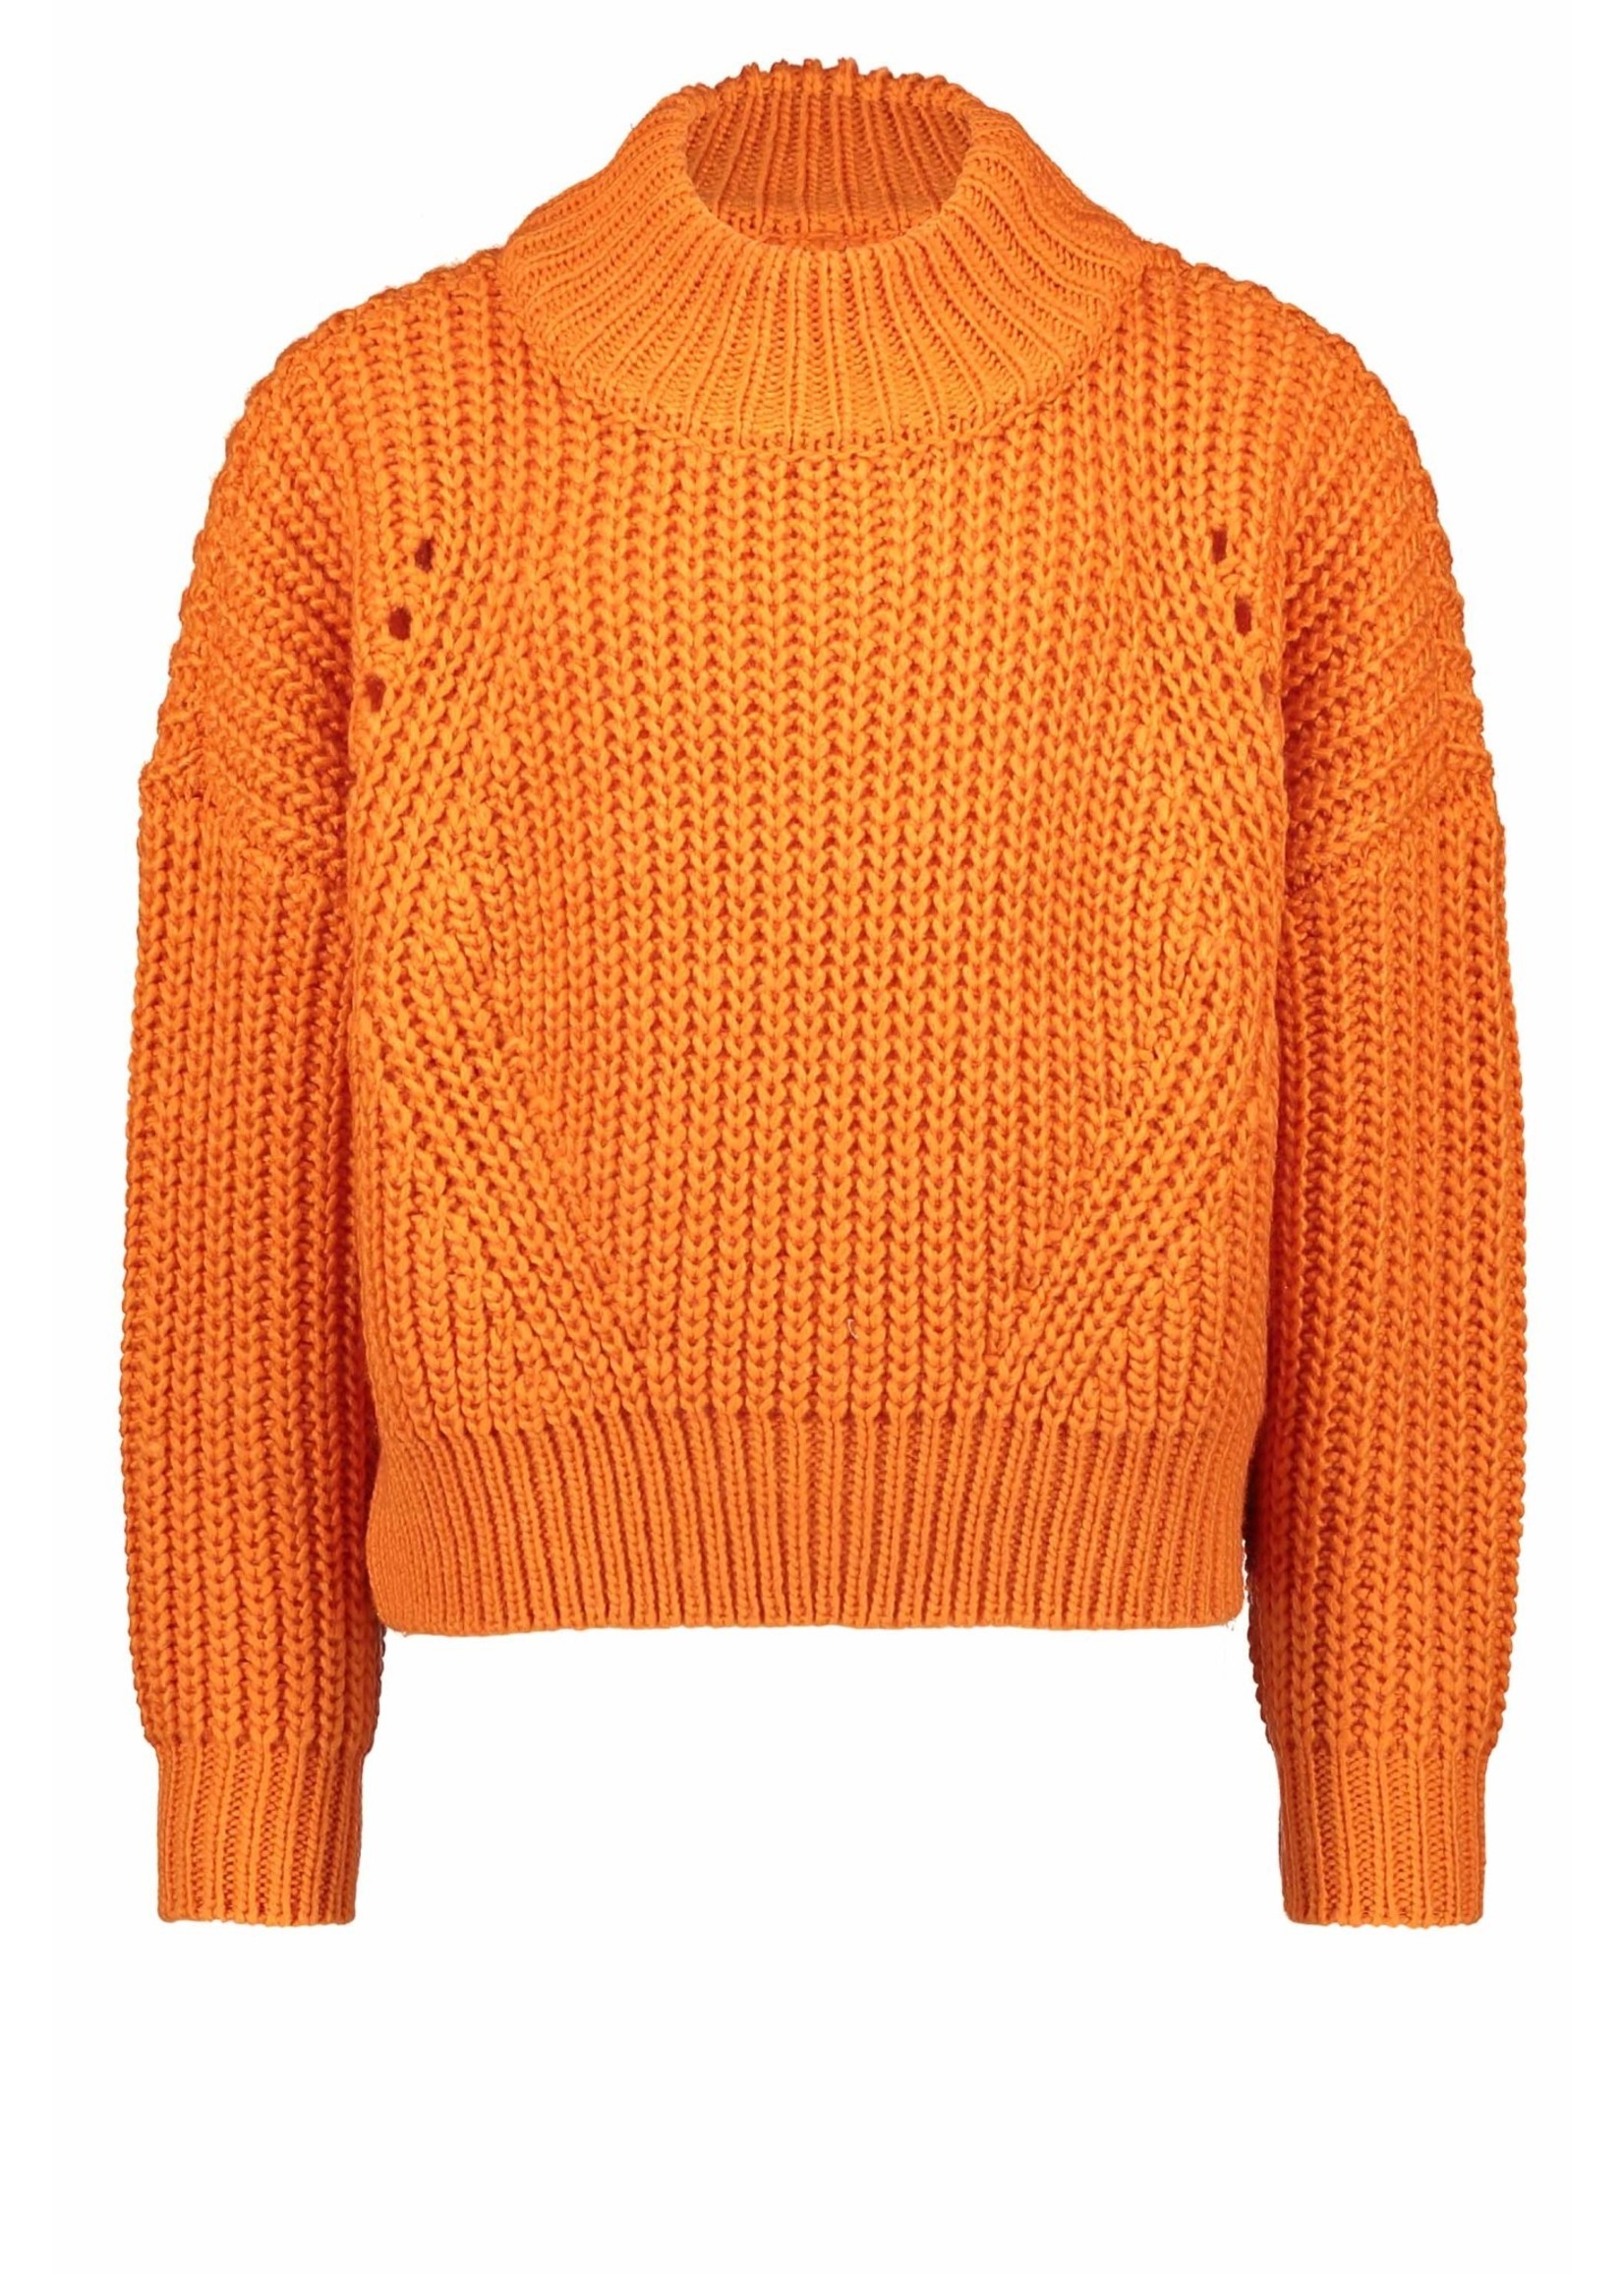 Brighty knit - Orange